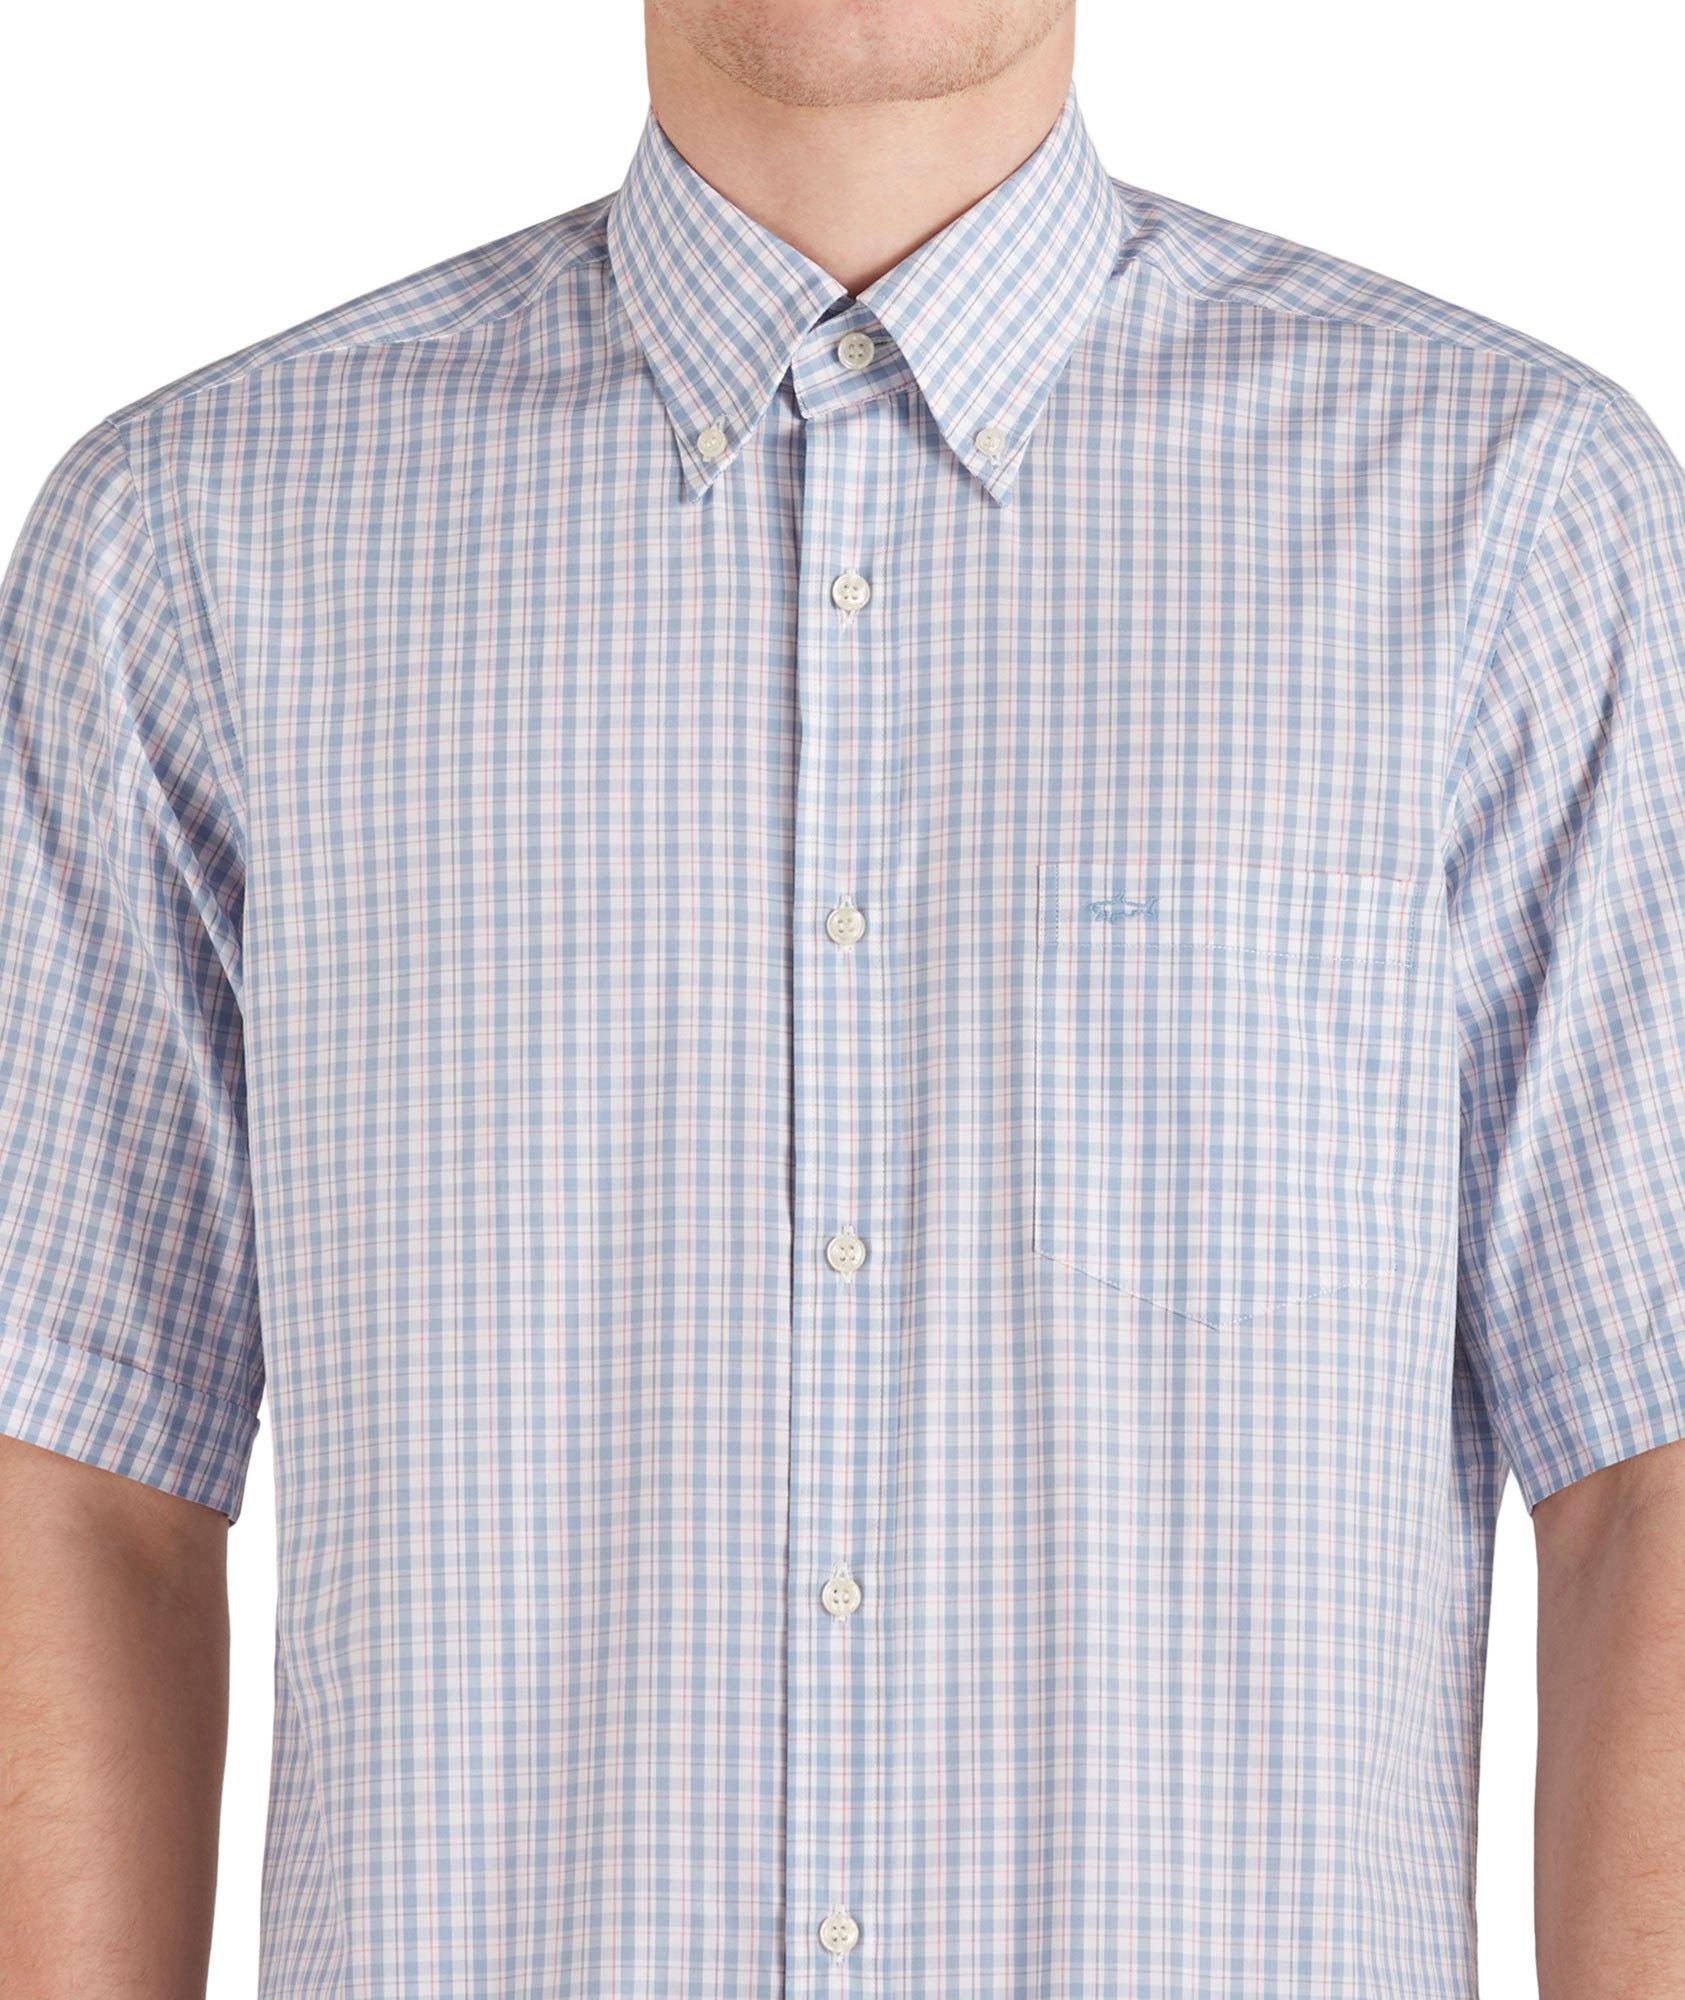 Short-Sleeve Checked Cotton Shirt image 2